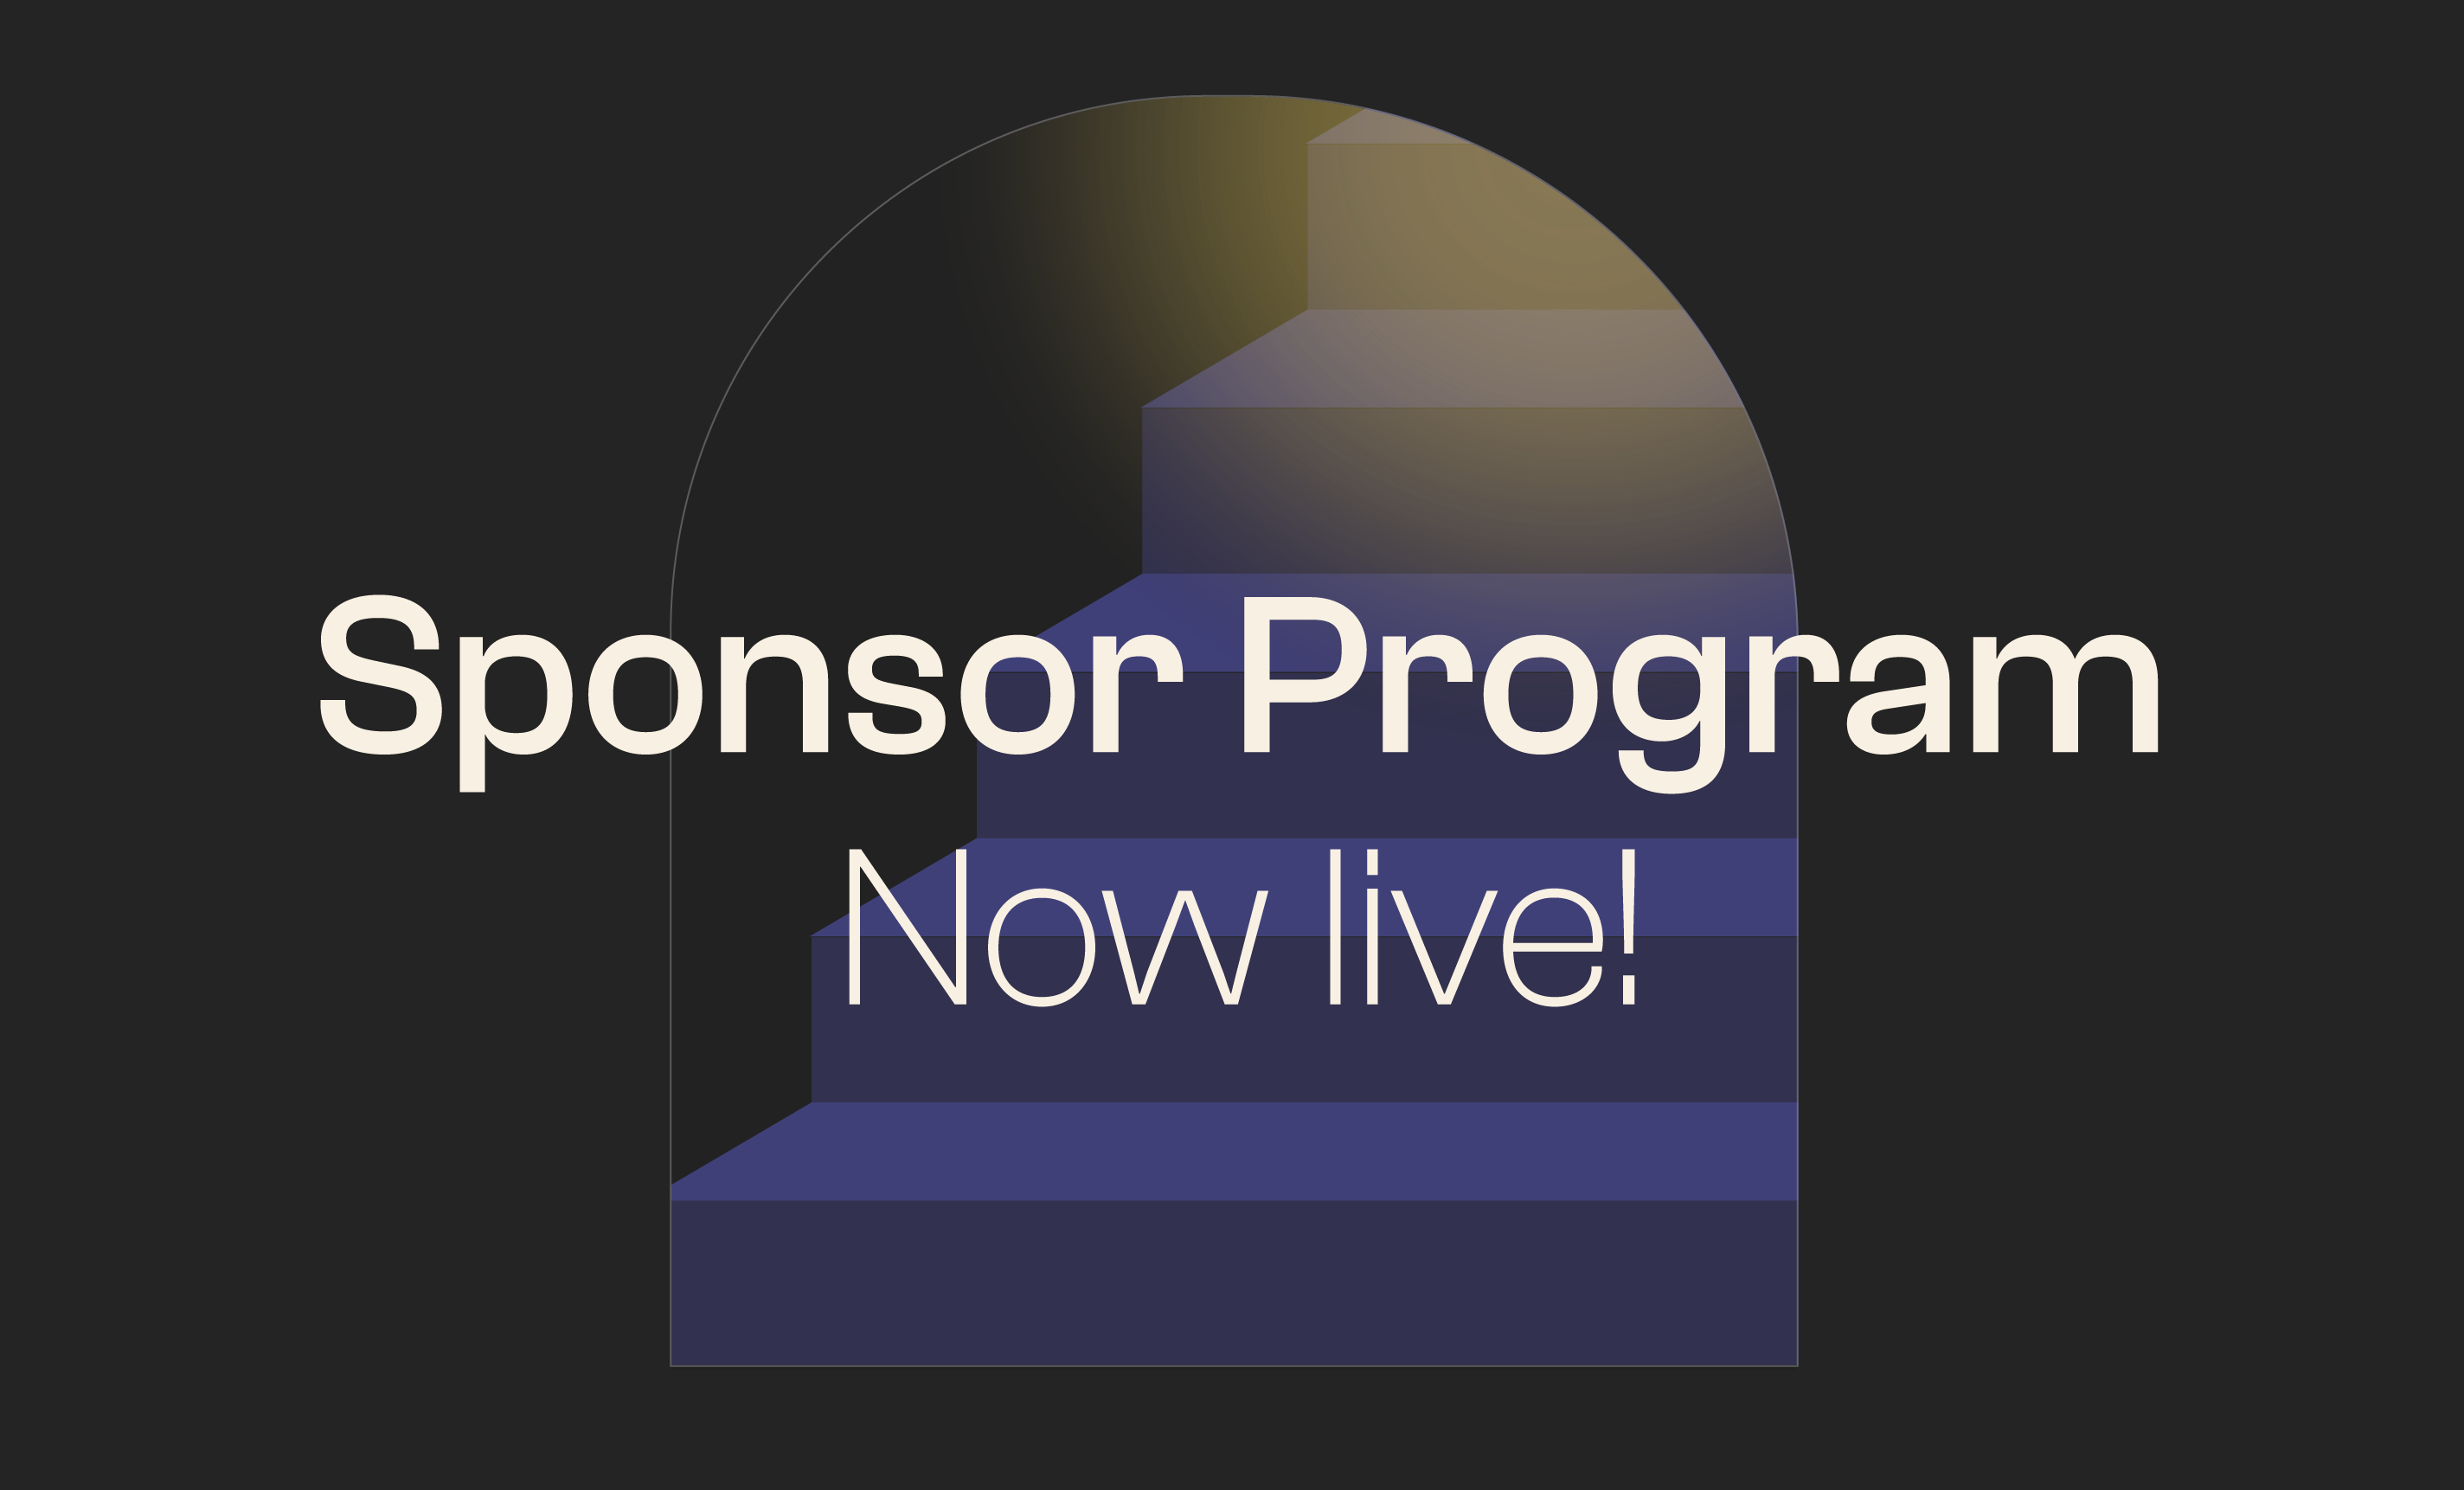 Clipper’s Sponsor Program is Now Live!